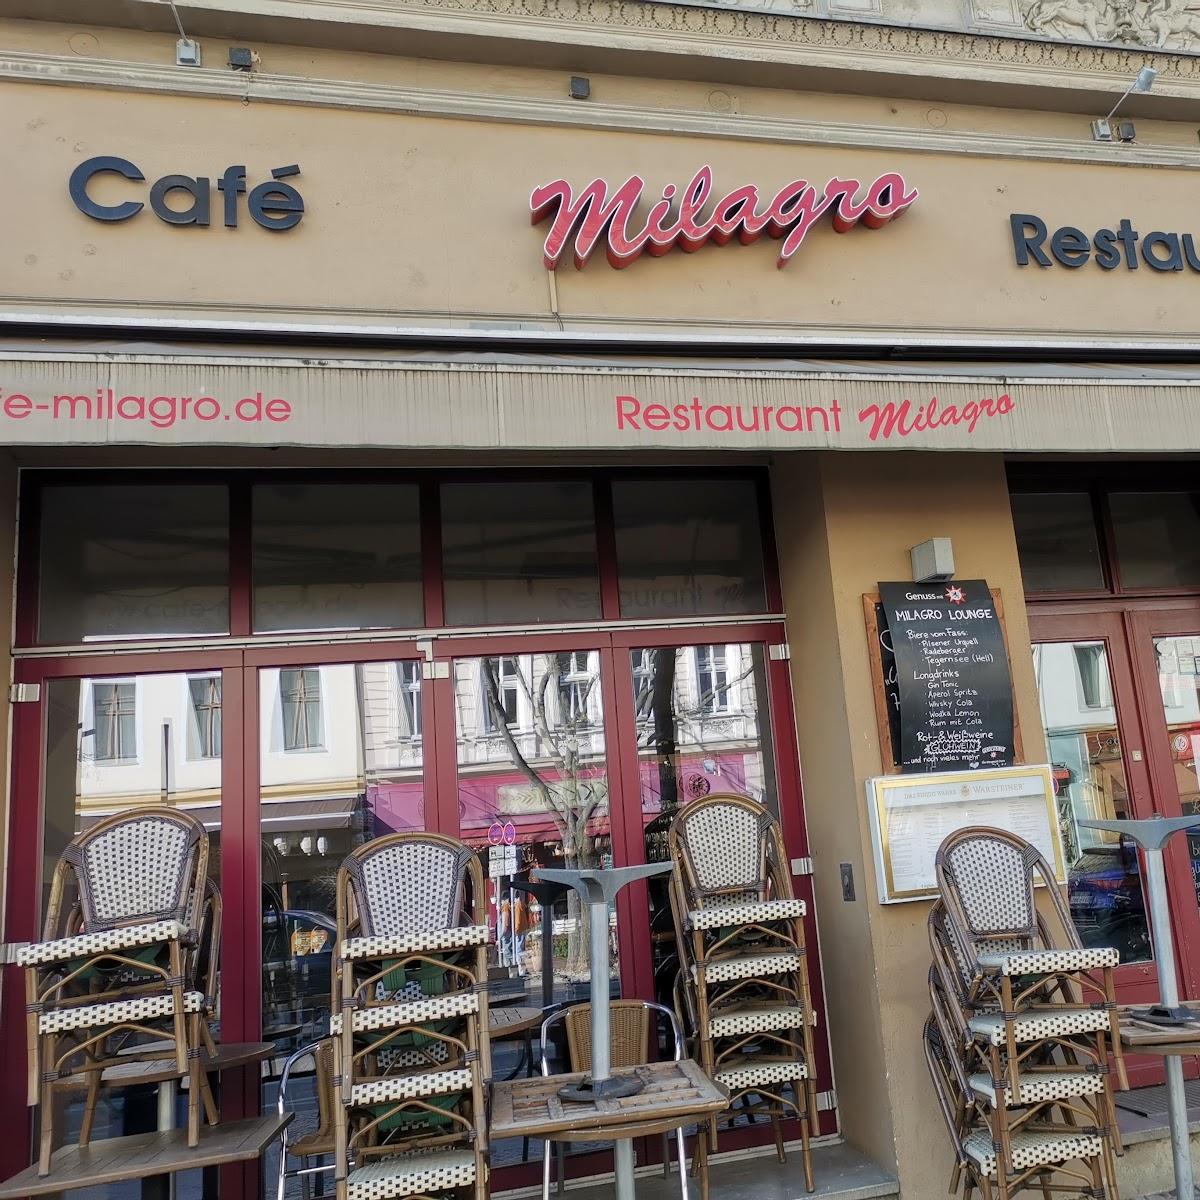 Restaurant "Cafe Milagro" in Berlin